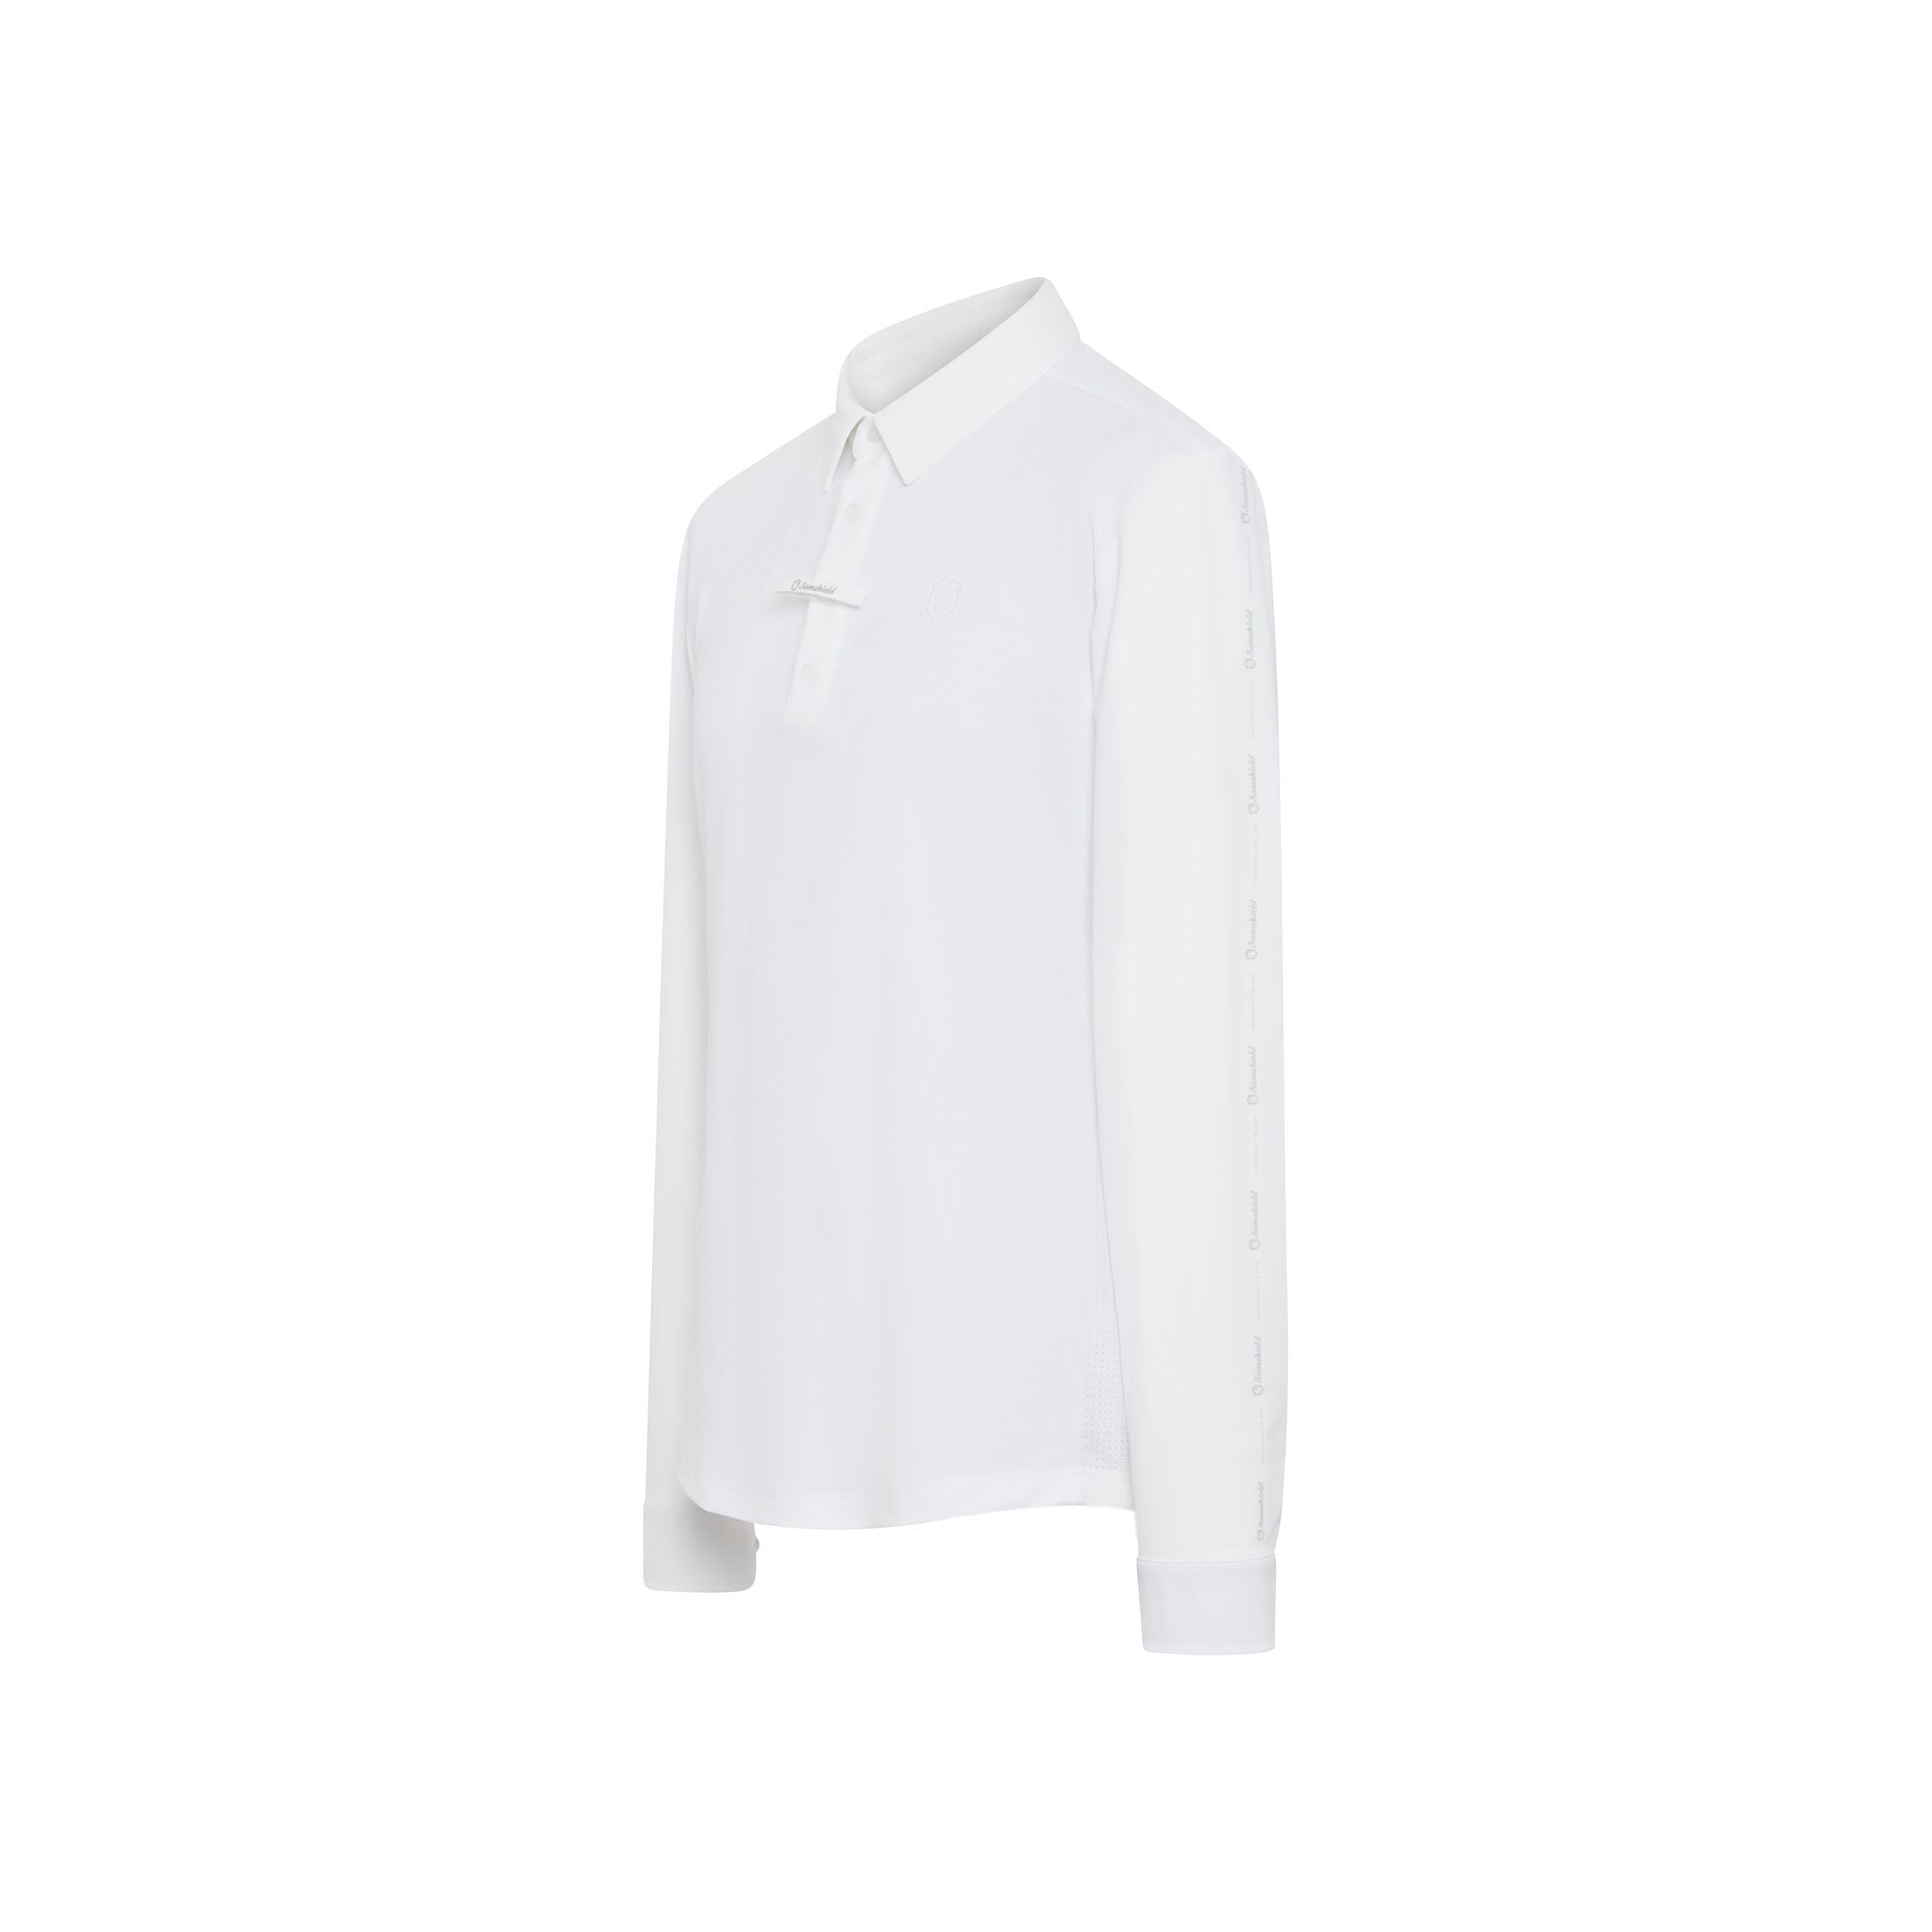 Mens Come Long Sleeve Show Shirt - White